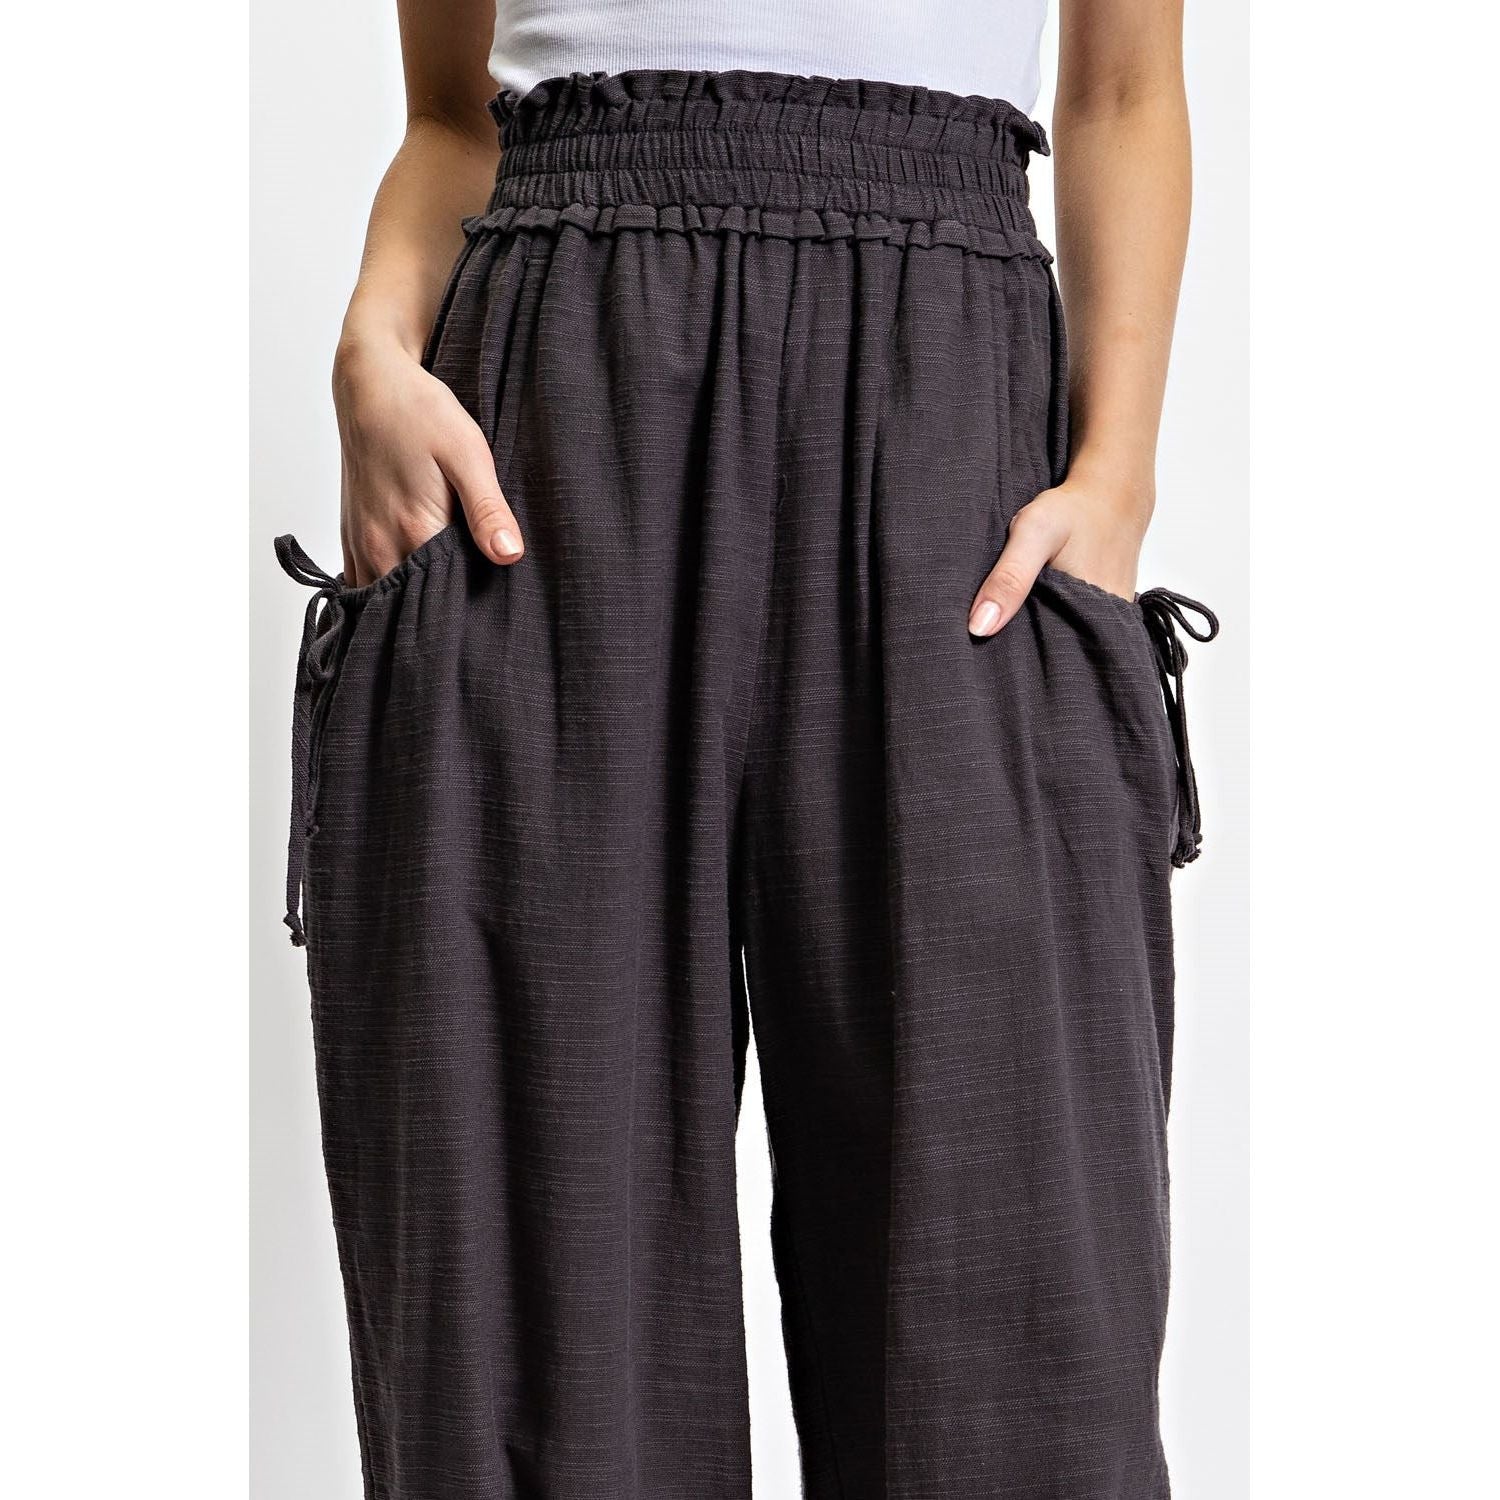 Ramona Cotton Pants With Side Pocket - Rhapsody and Renascence -Pants - boho, cotton, misses, pants, plus, plus size